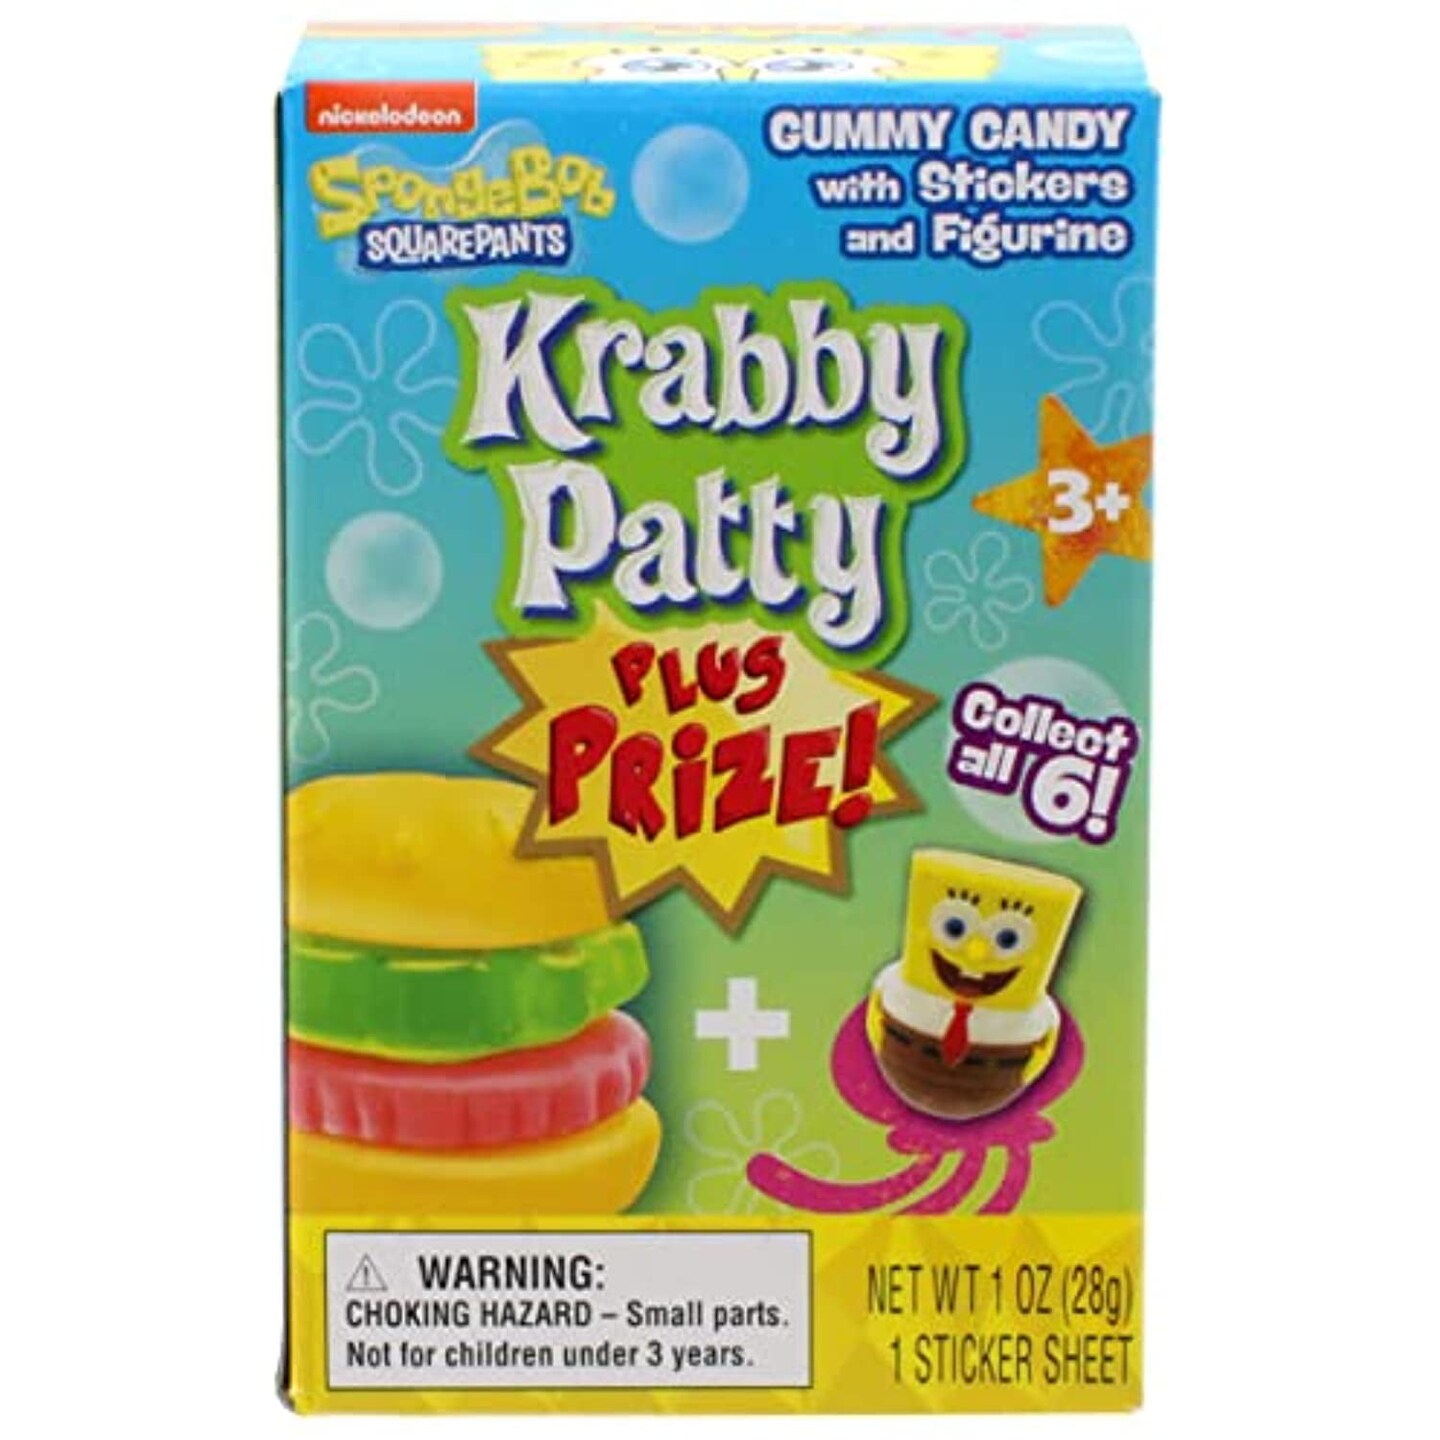 SpongeBob SquarePants Krabby Patty Plus Prize Gummy Candy with Surprise Toy  (Case of 8)